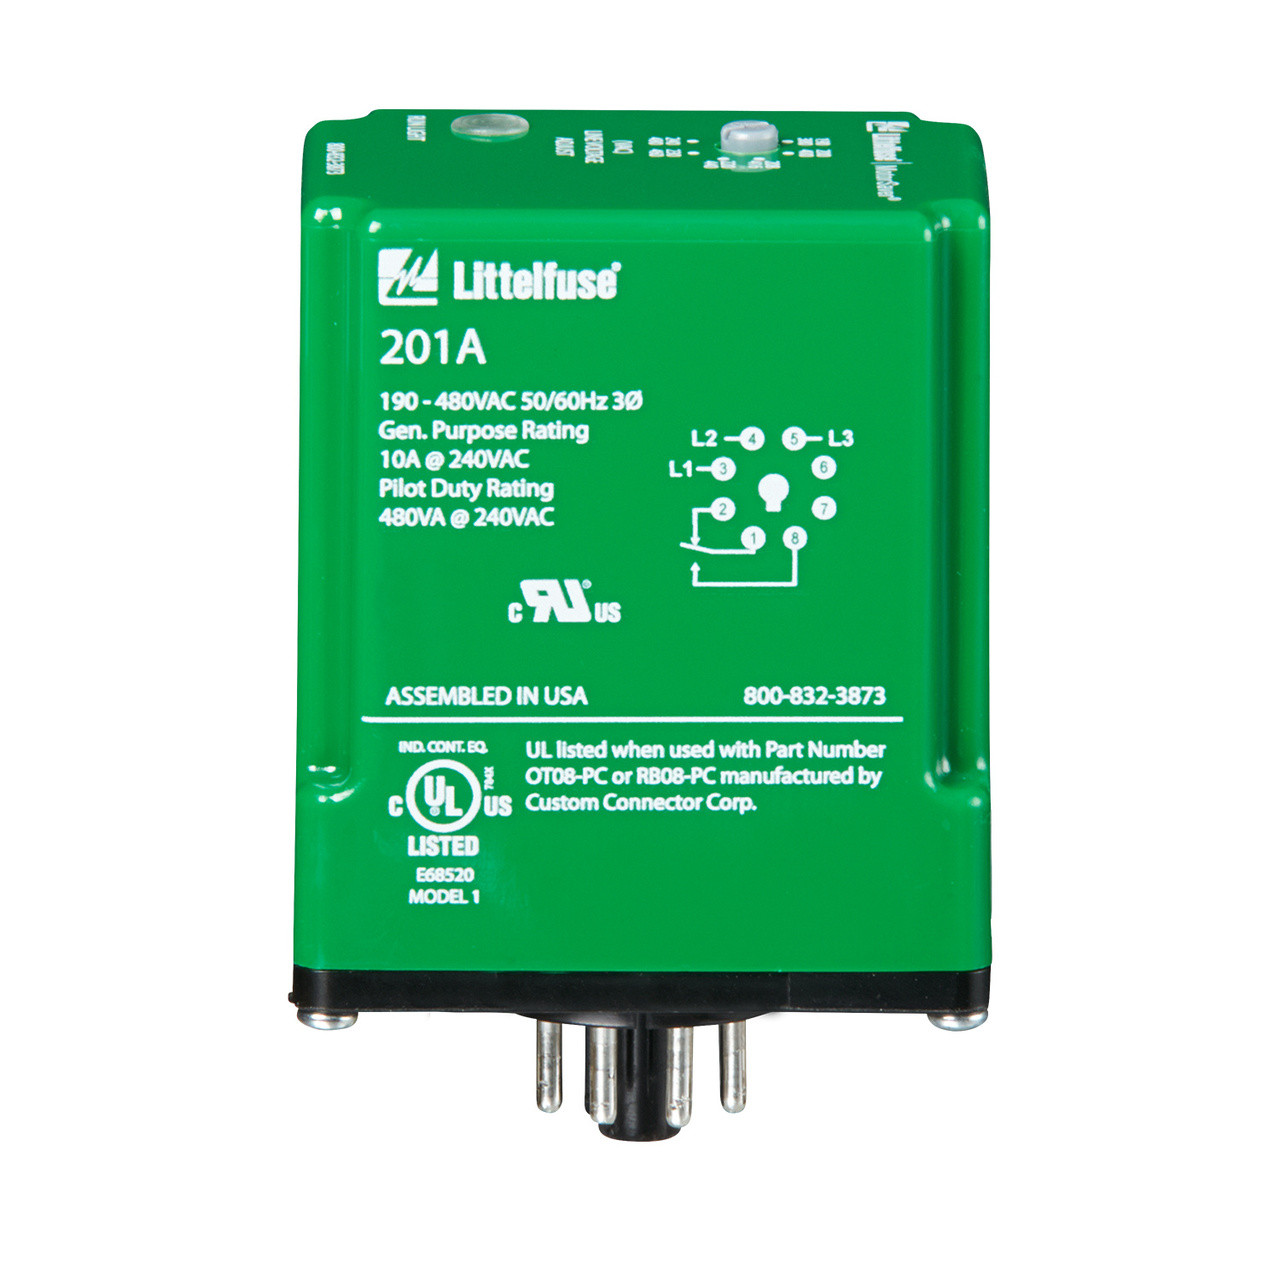 Littelfuse-Symcom 201A-9 Voltage Monitor Relays